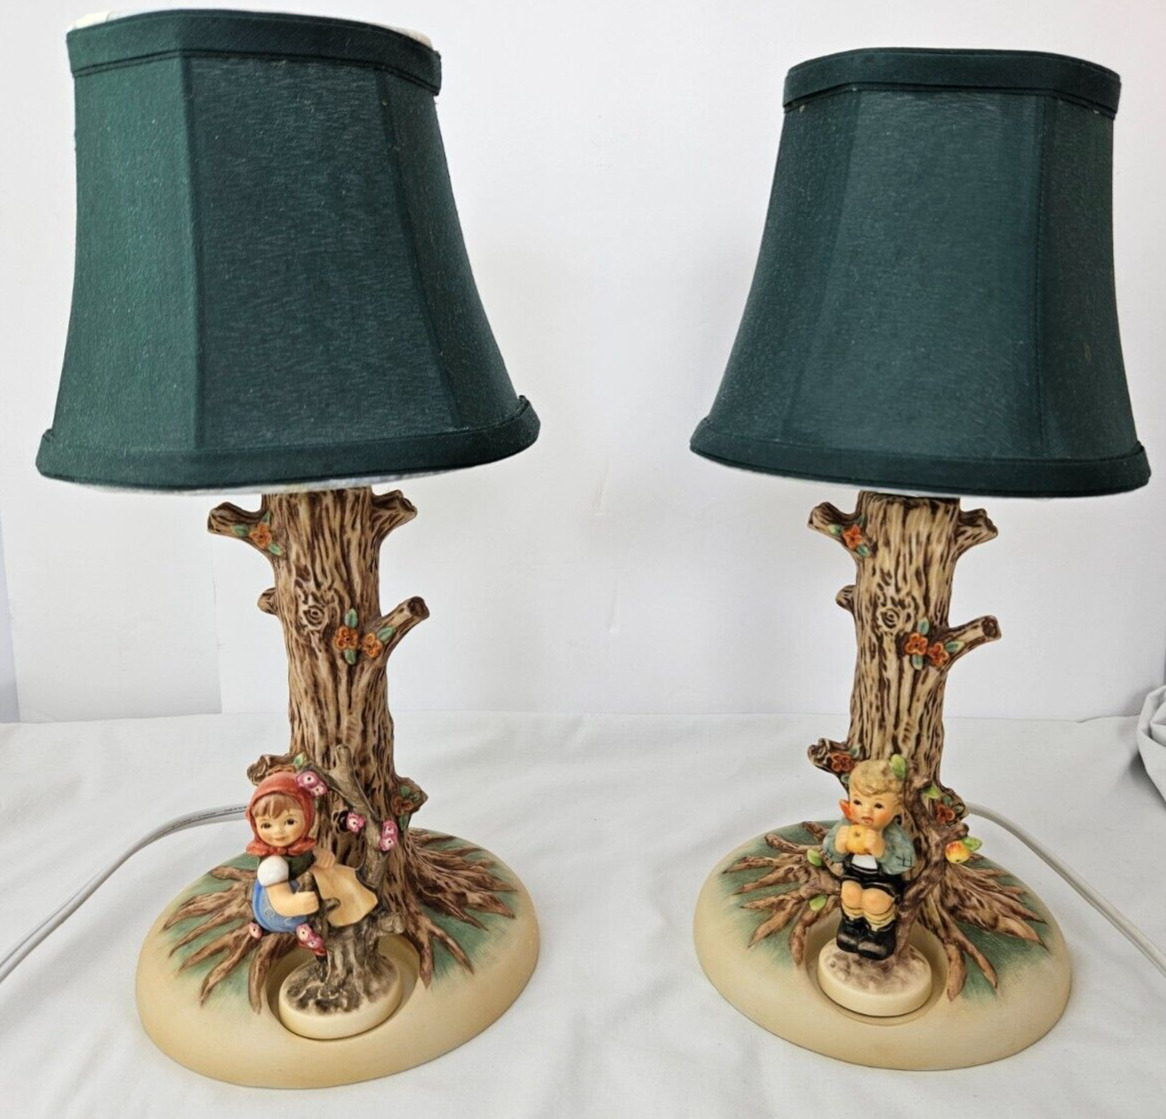 Pair of GOEBEL LAMPS  w/ Apple a Day Boy & Apple Tree Girl Figurine 2003 403 141